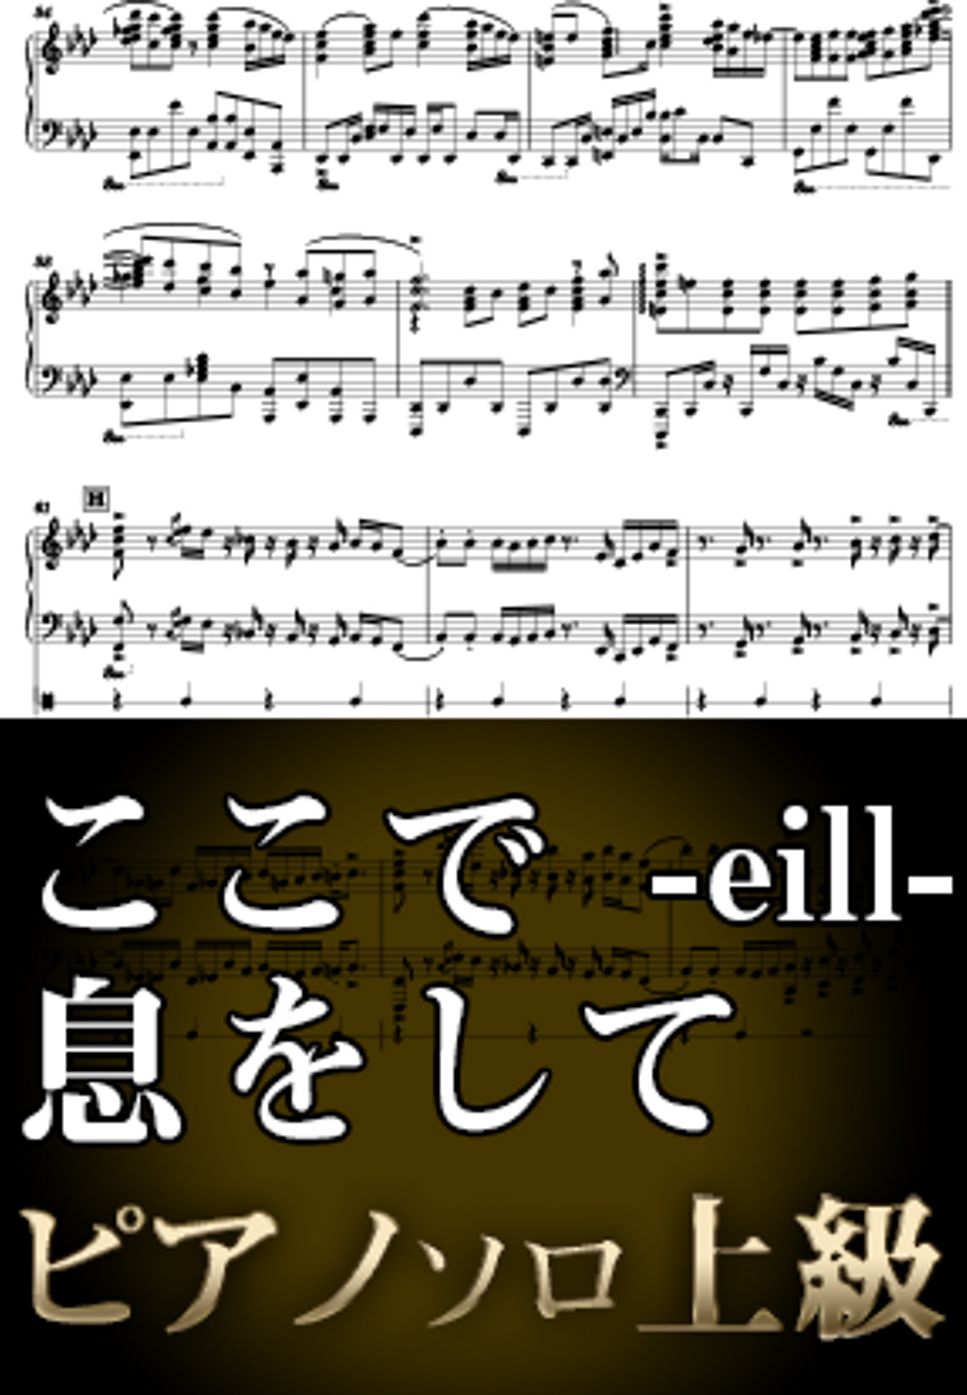 eill - ここで息をして (ピアノソロ上級  / TVアニメ『東京リベンジャーズ』ED) by Suu